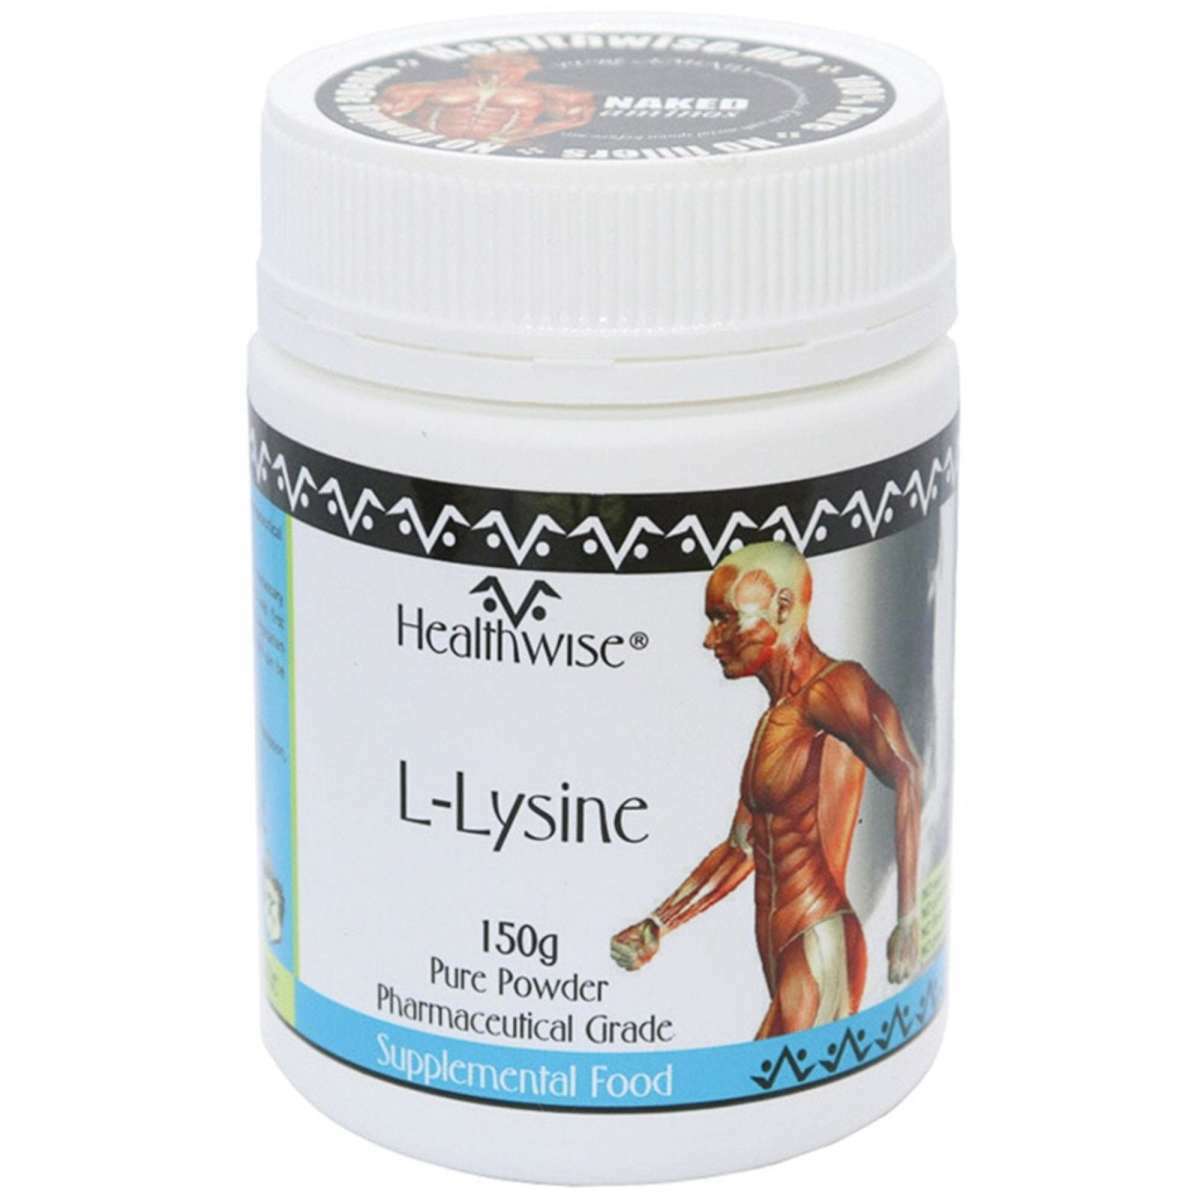 Healthwise L-Lysine 150g Powder